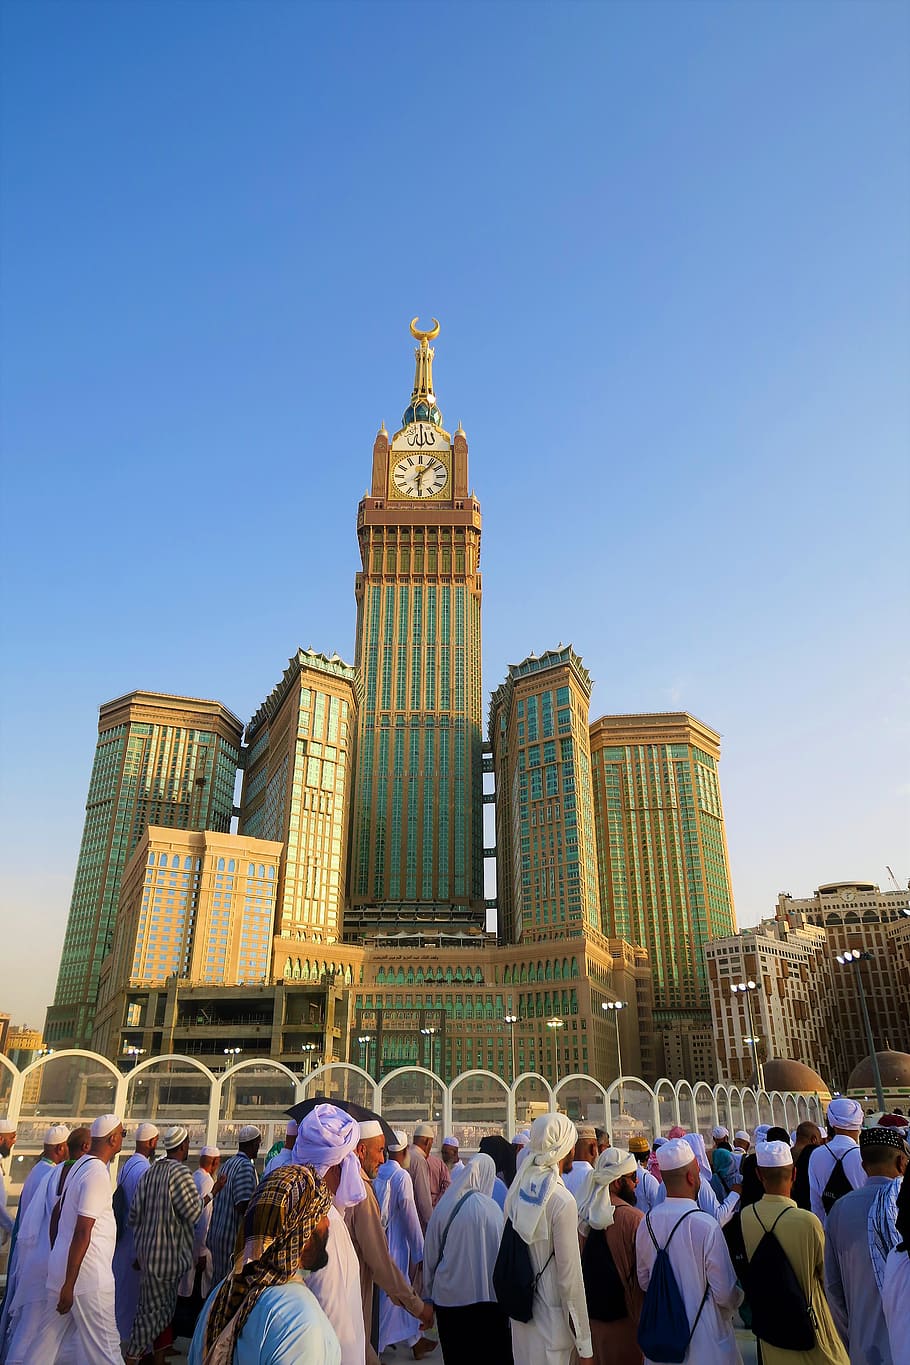 mecca, the pilgrim's guide, islam, travel, religion, muslim, skyscrapers, buildings, architecture, people